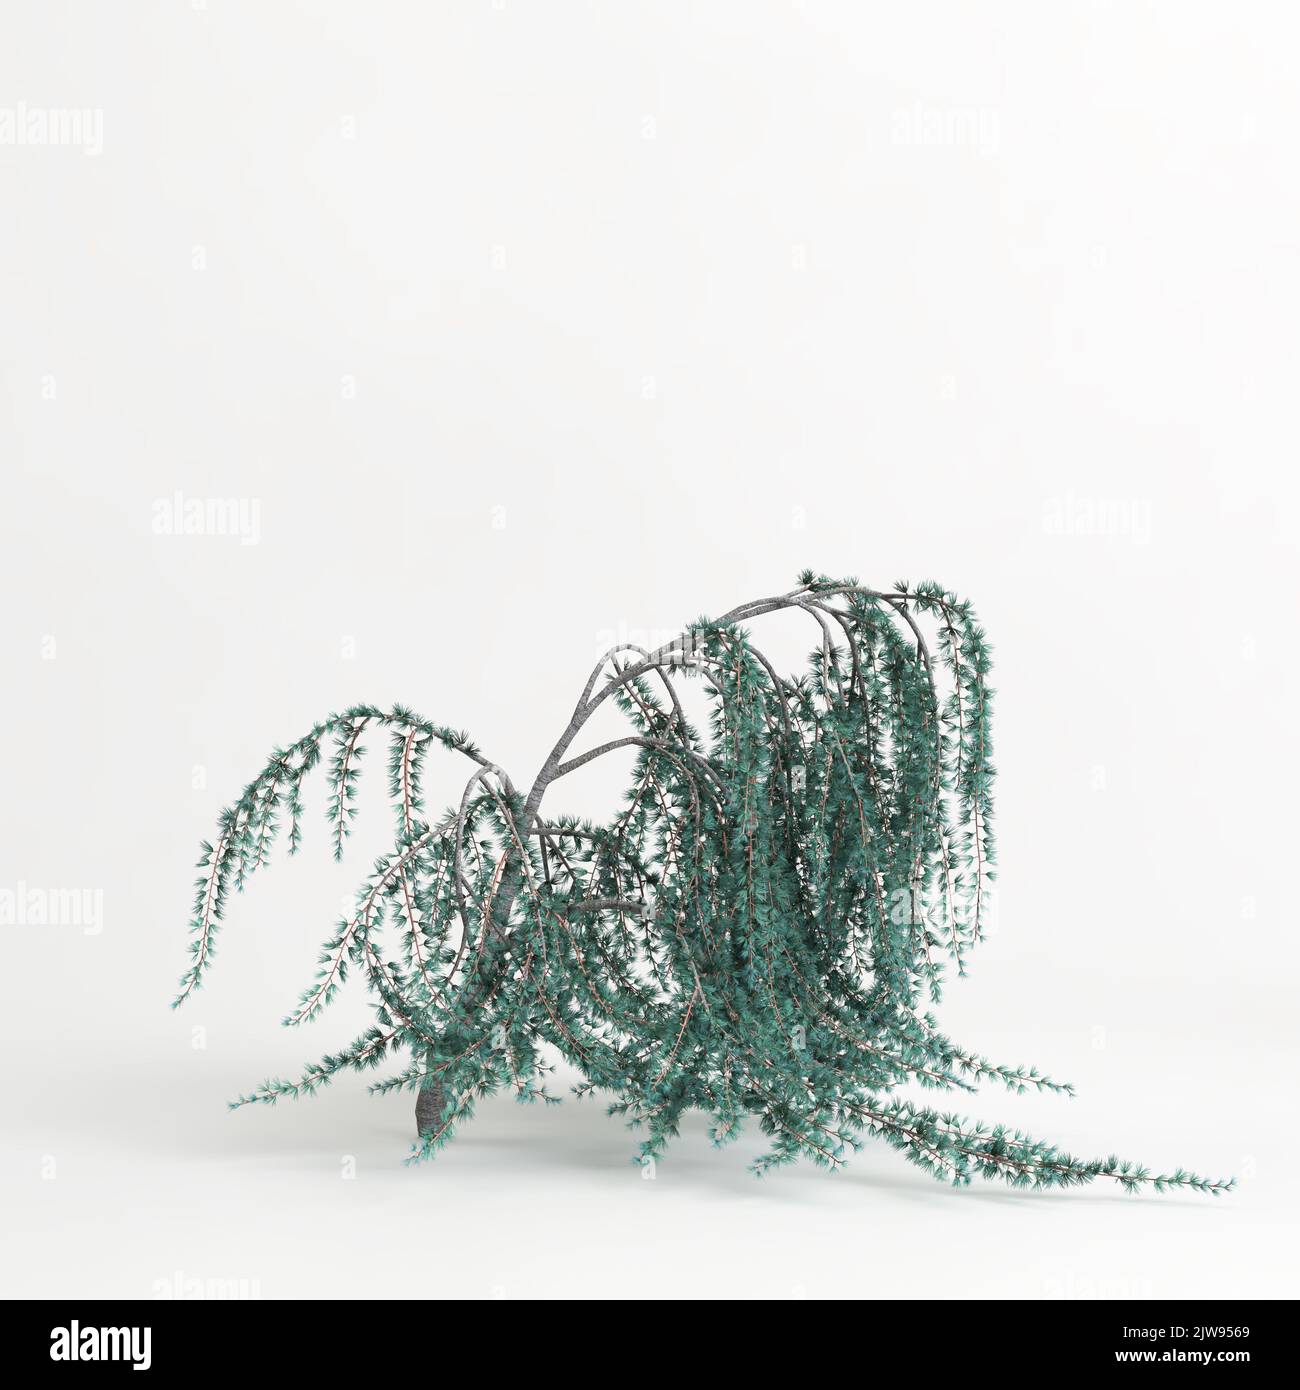 3d illustration of cedrus atlantica glauca pendula tree isolated on white background Stock Photo